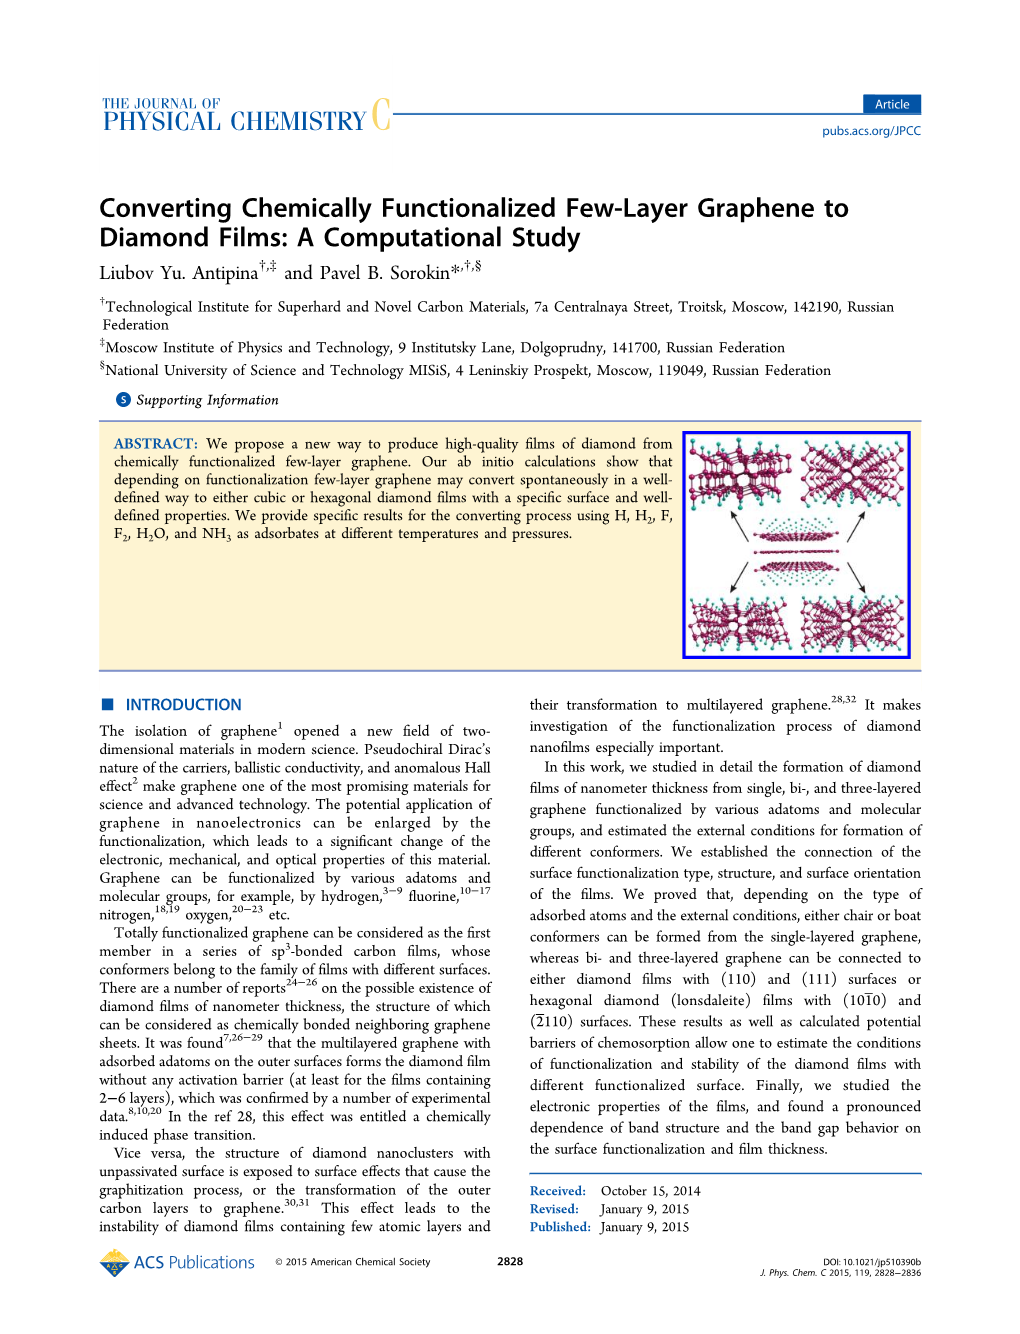 Converting Chemically Functionalized Few-Layer Graphene to Diamond Films: a Computational Study Liubov Yu